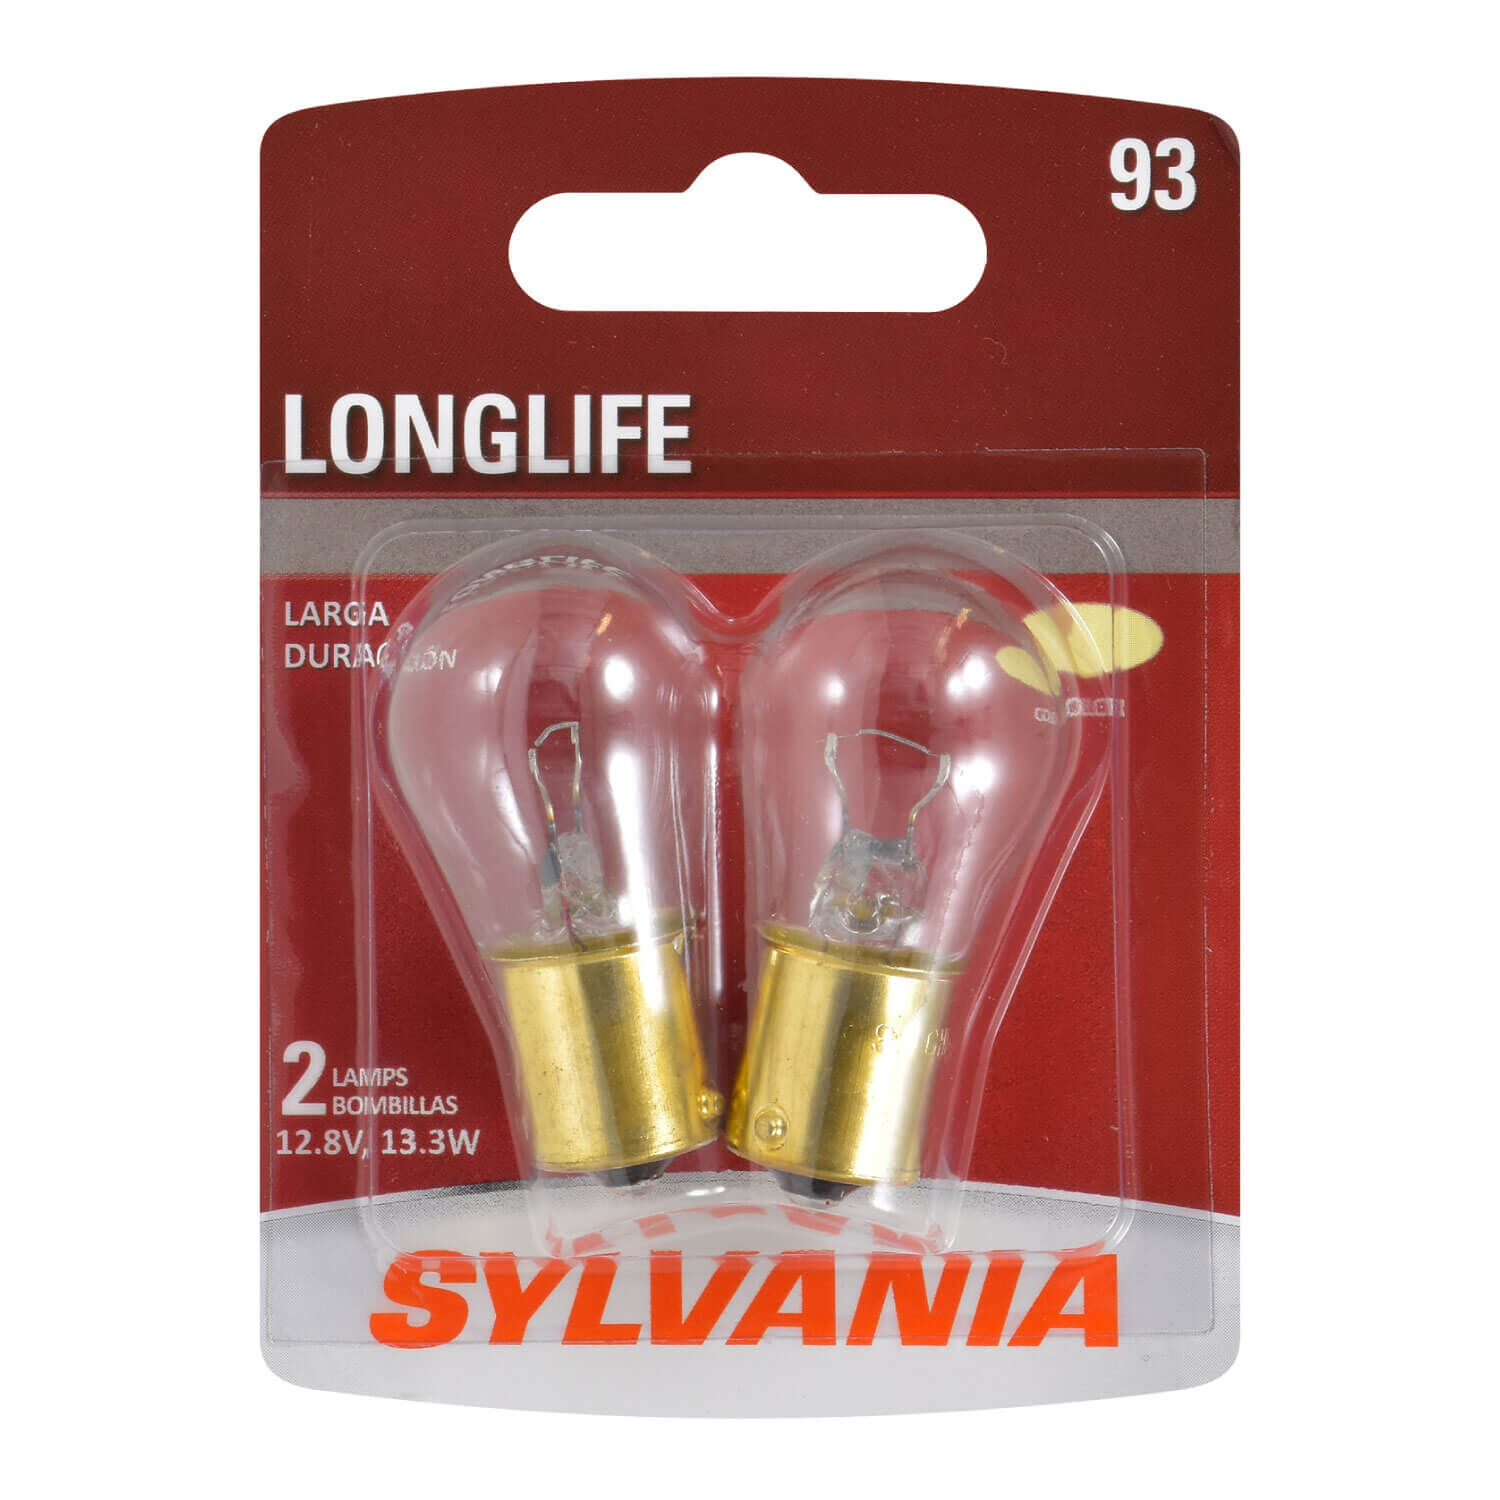 SYLVANIA 93 Long Life Mini Bulb, 2 Pack